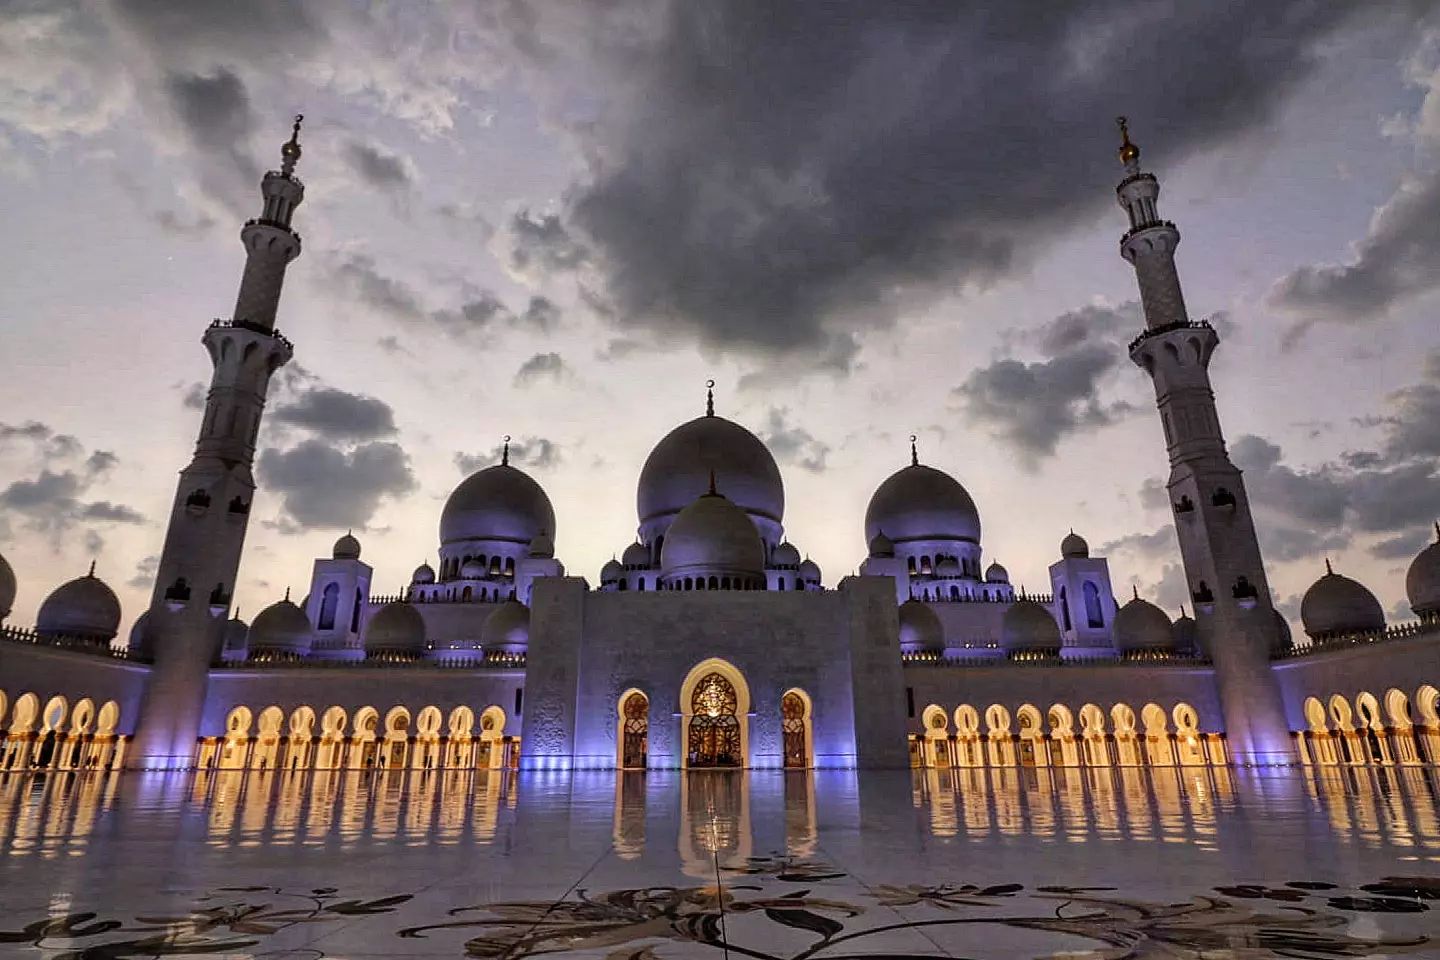 Sheikh Zayed Mosque
🎈 Abu Dhabi 
(Moschea Bianca)
.
#abudhabi #travelphotographer #travelblogger #photooftheday #mosque
.
📸 @grtrsm